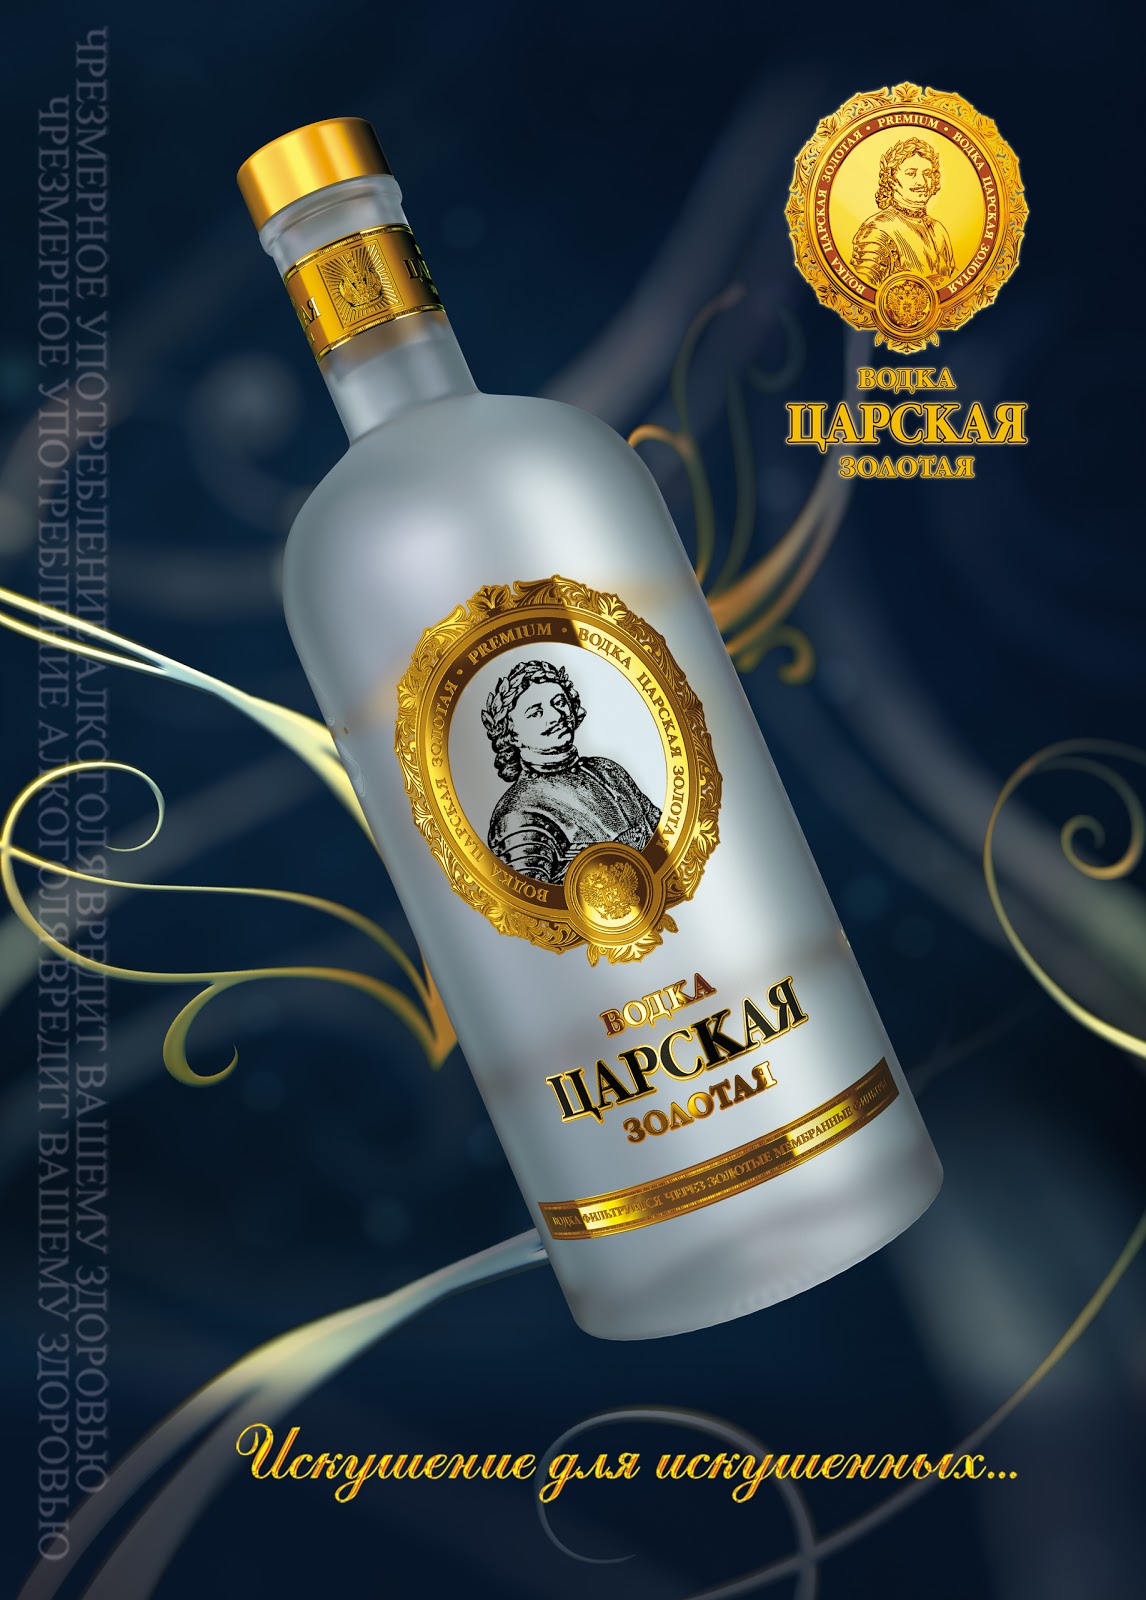 AUX GRANDS VINS DE FRANCE: Vodka TSARSKAYA la vodka des Tsars